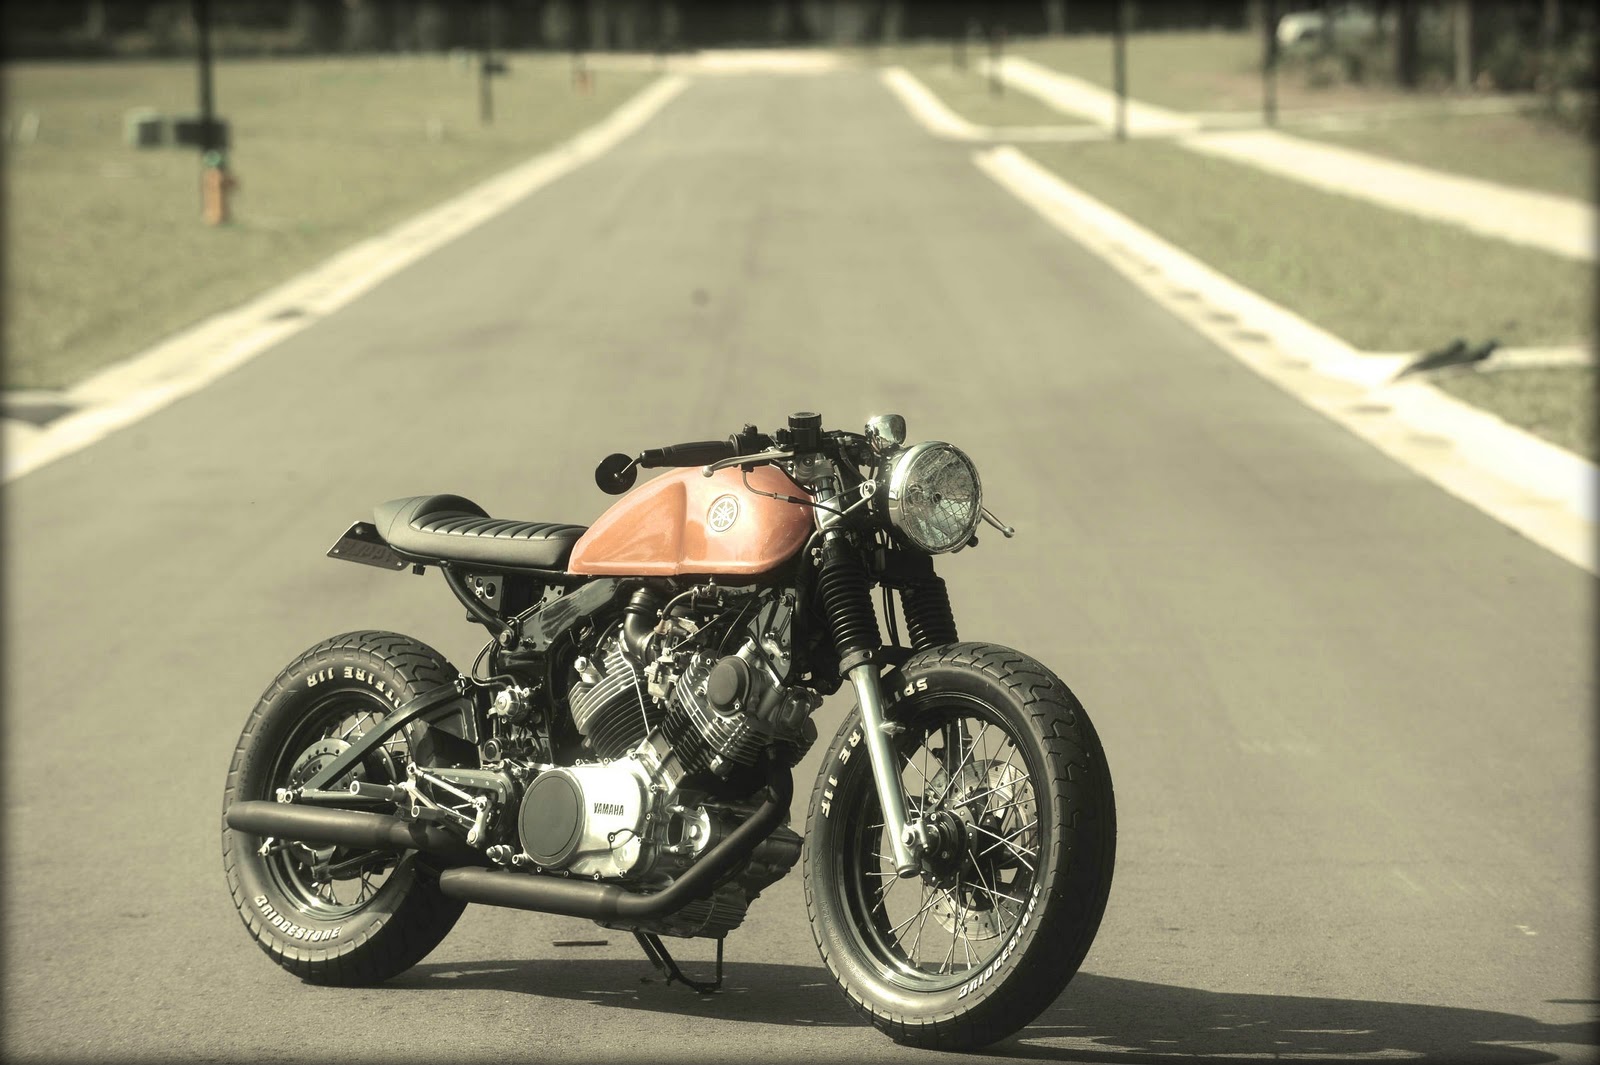 Yamaha Motorcycle Cafe Racer Wallpaper - Resolution:1920x1080 - ID:410887 -  wallha.com